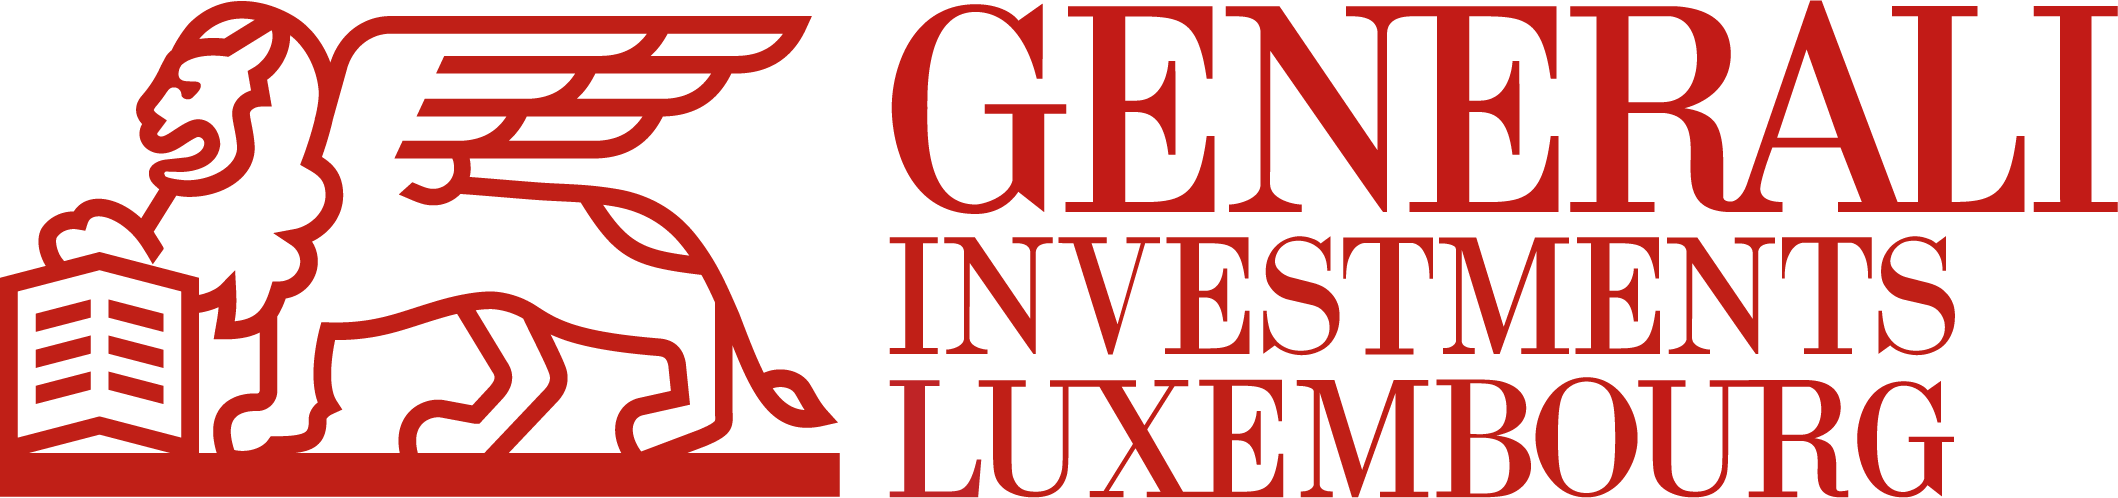 Generali Investments logo